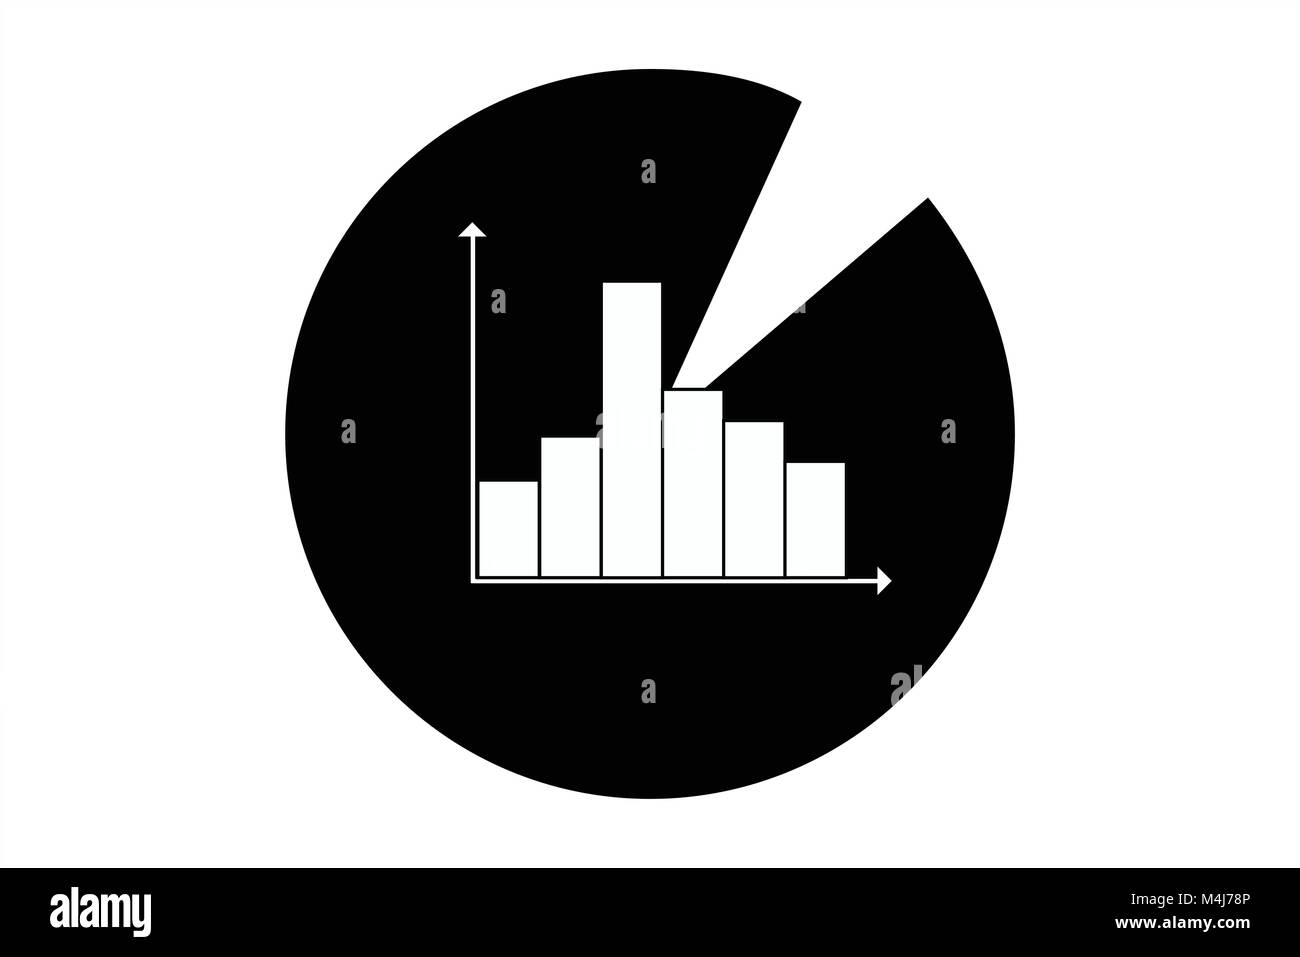 Pie Chart Statistics Mathematics